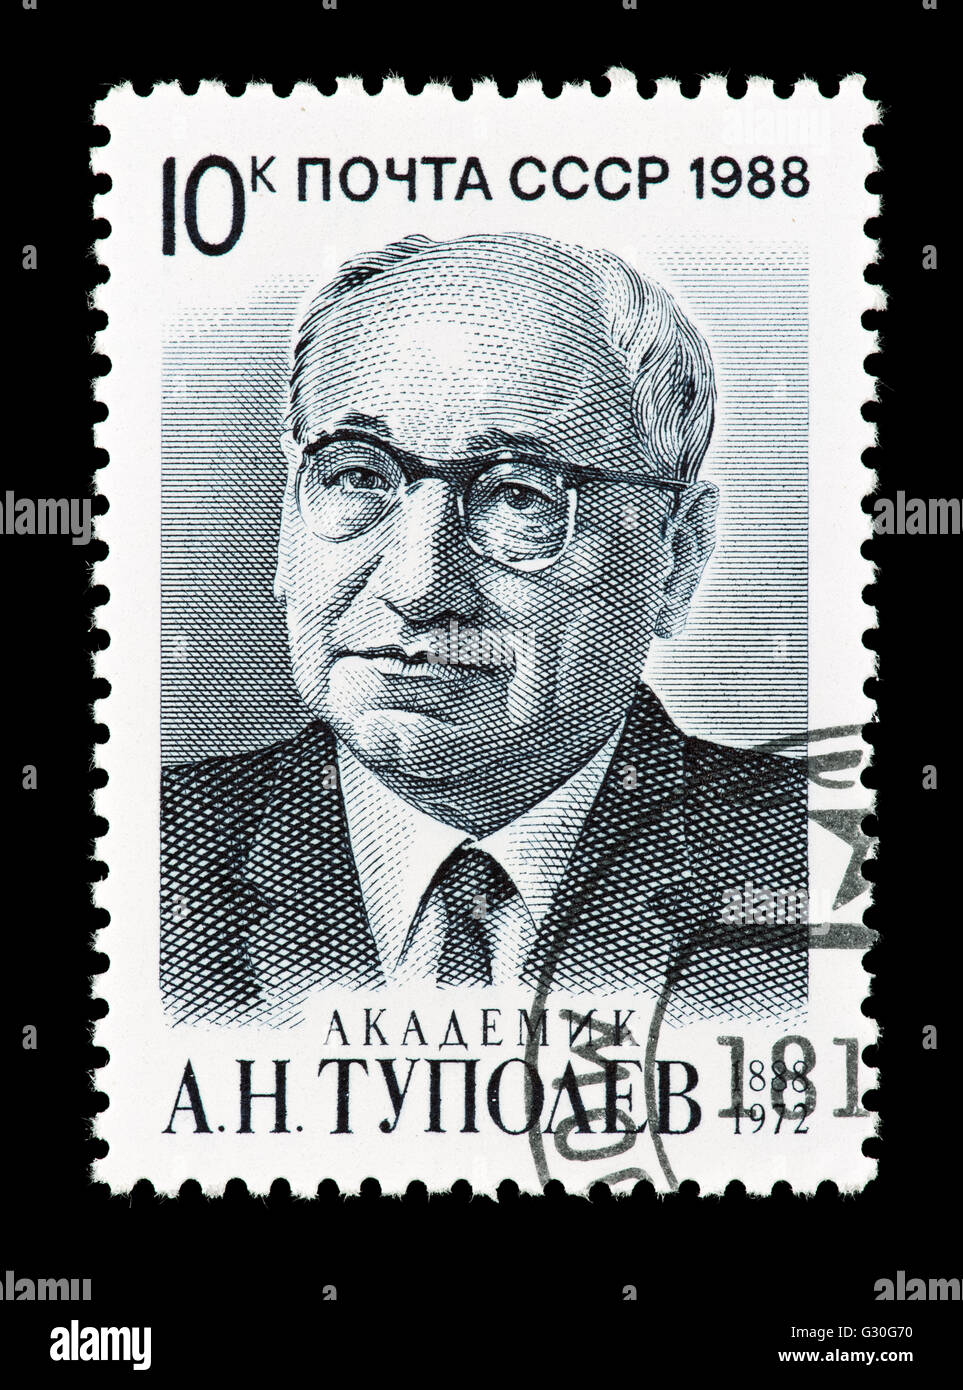 Postage stamp from the Soviet Union depicting Andrei Nikolayevich Tupolev, aeronautical engineer. Stock Photo